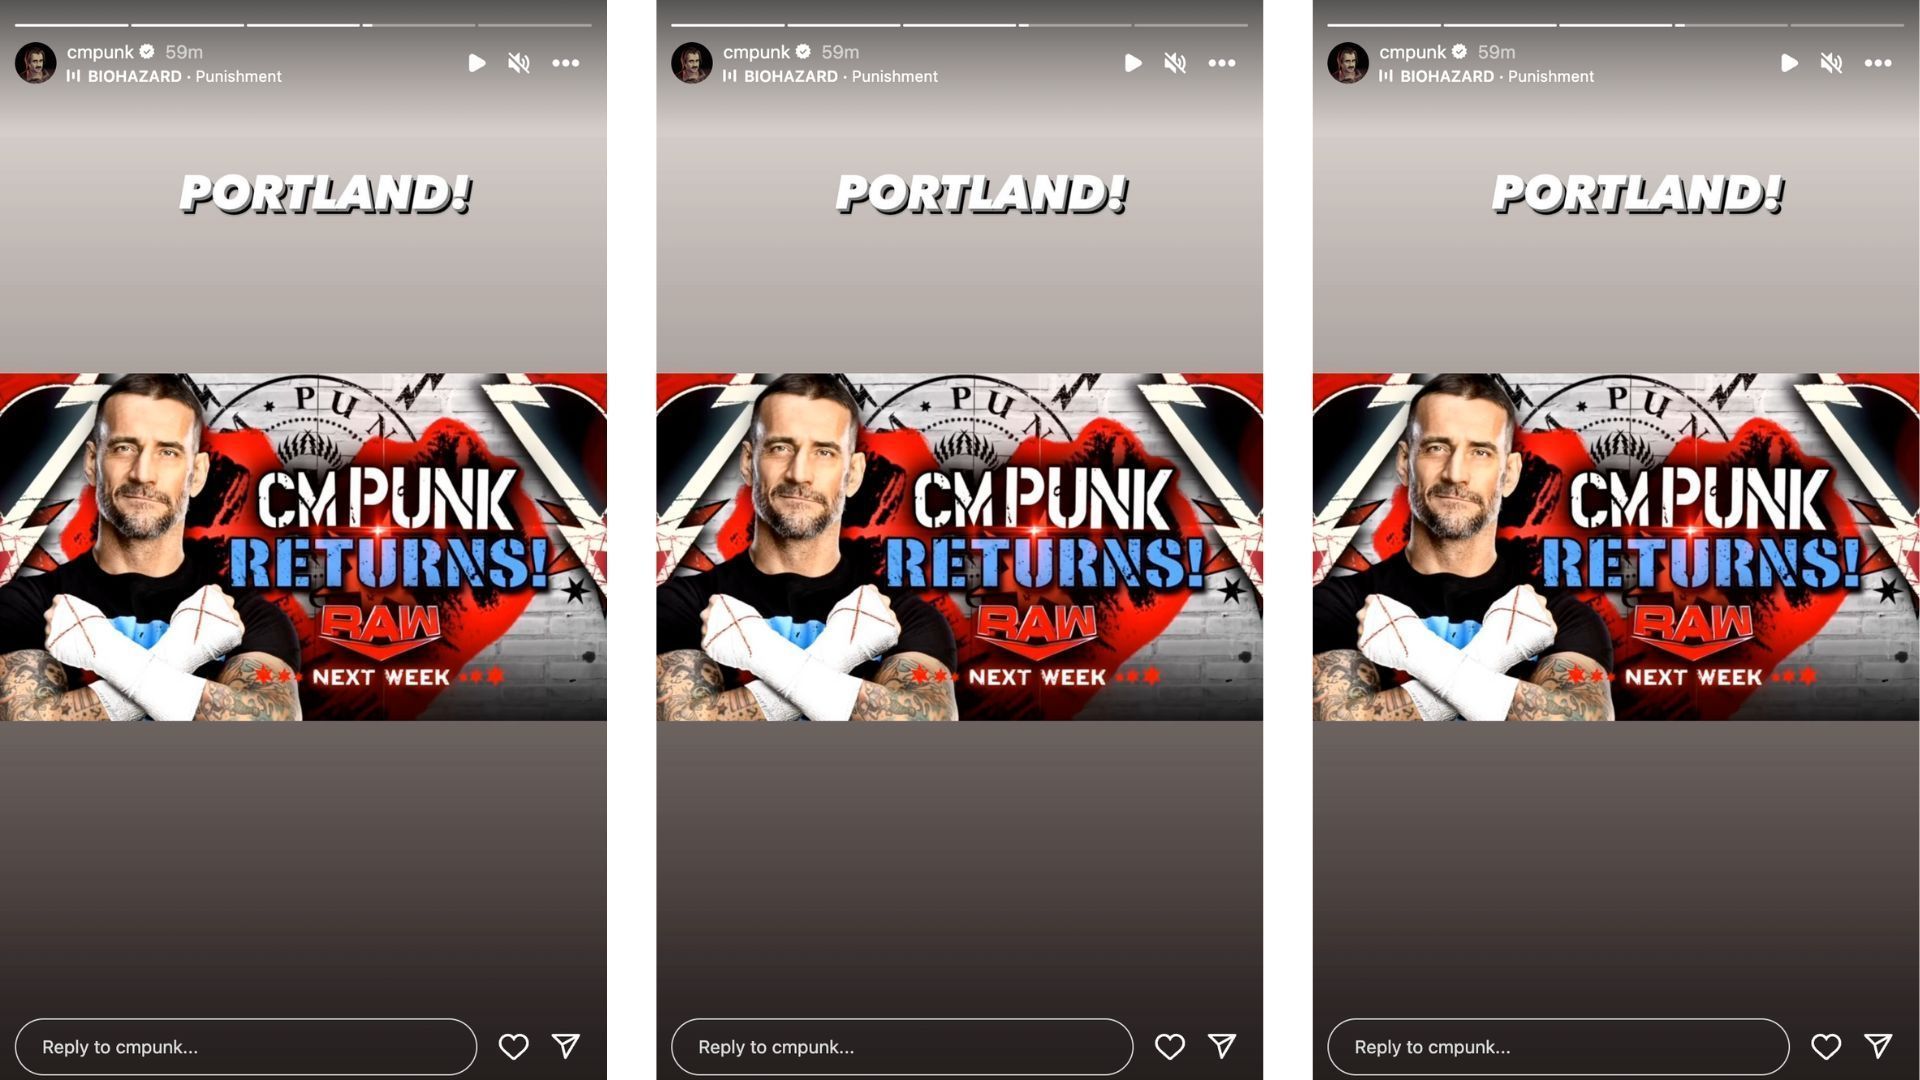 Punk sends message on Instagram after Day 1.